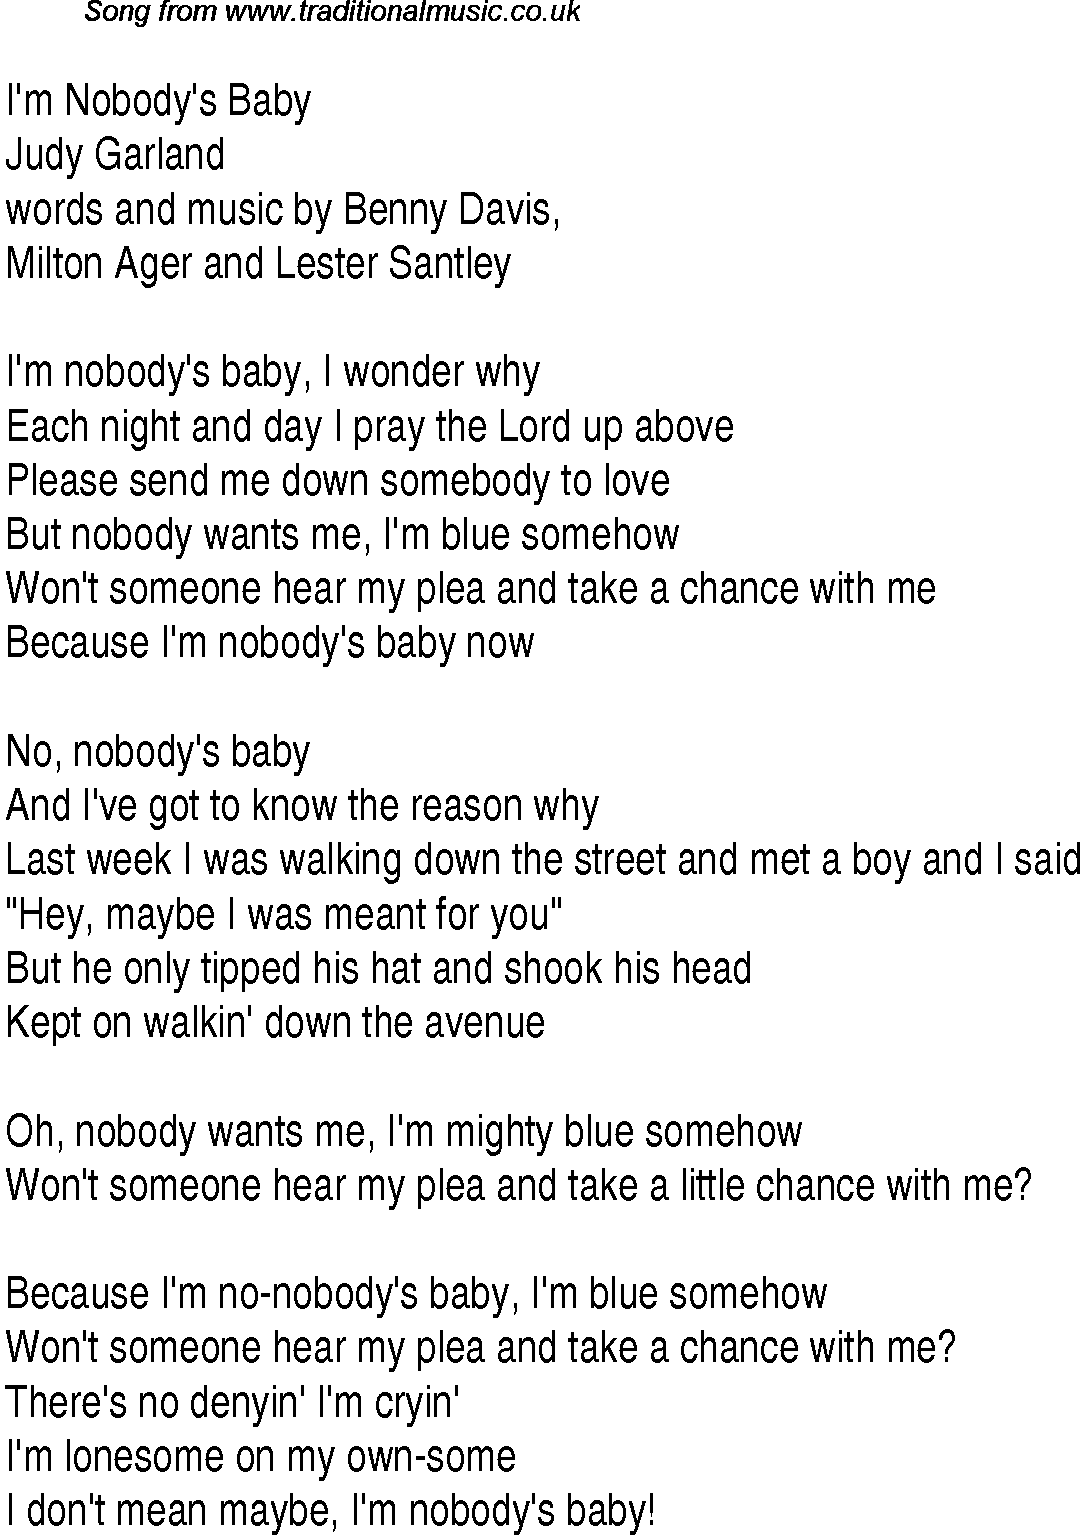 Music charts top songs 1940 - lyrics for Im Nobodys Baby